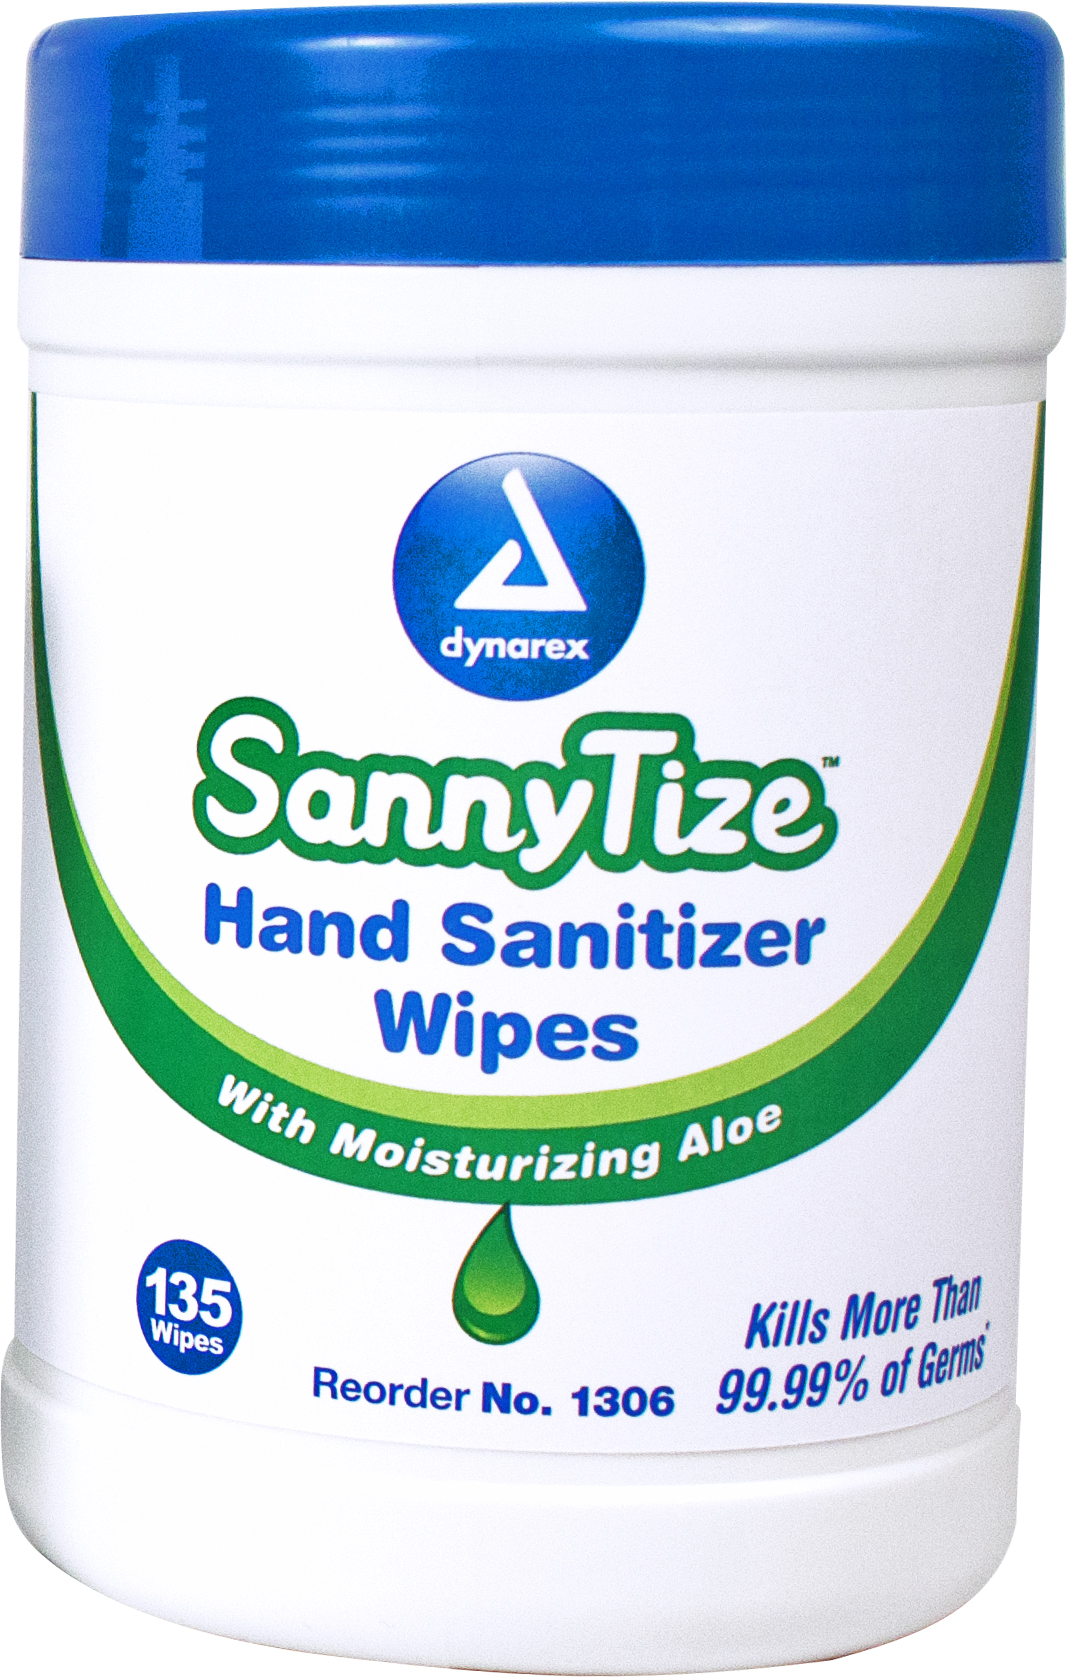 1306 Dynarex弹出式sannytizer即时洗手液雨刷用70%乙醇饱和